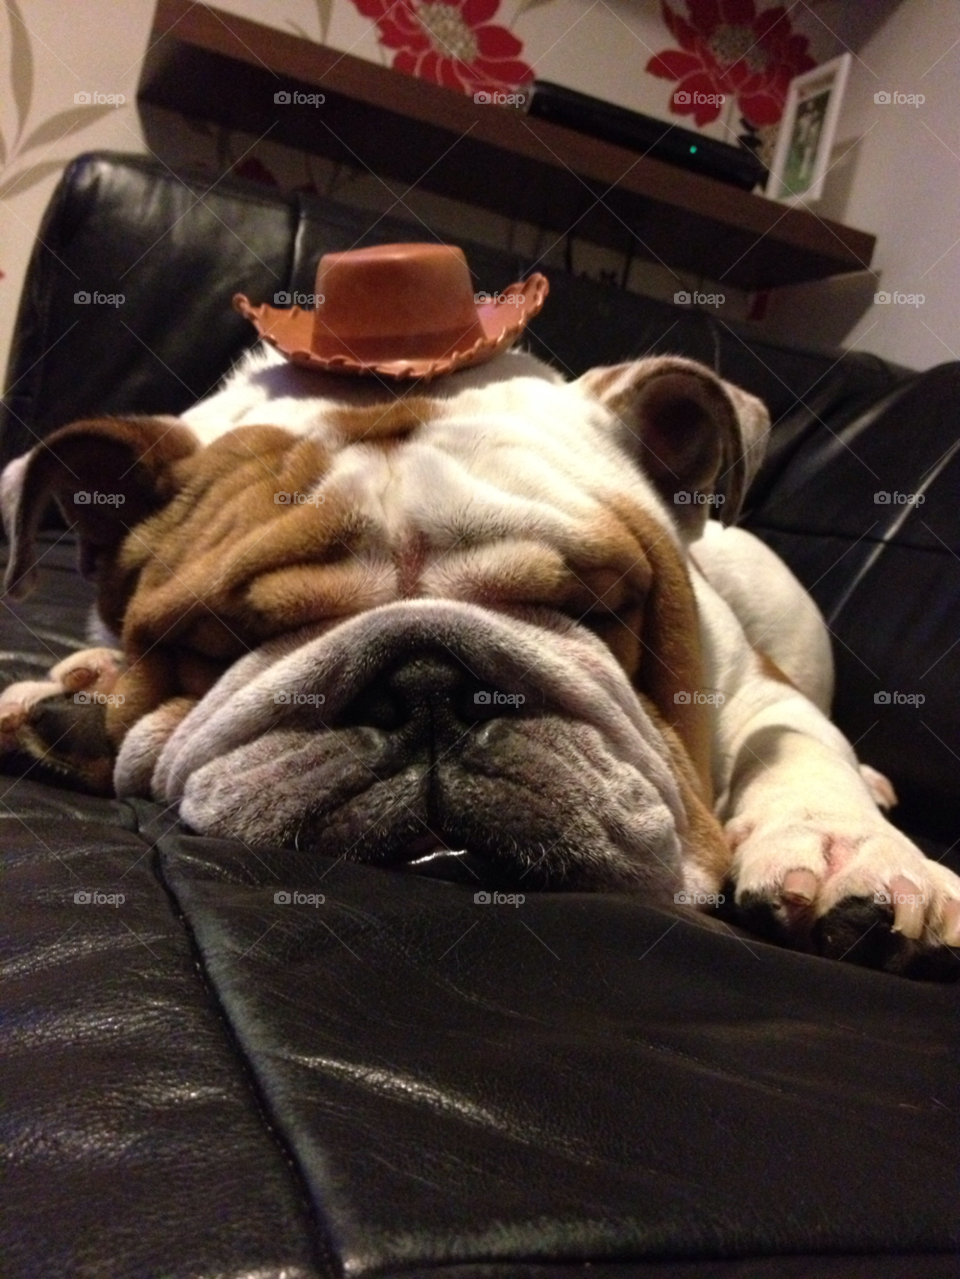 woody big dog leather sofa bulldog sleeping with hat by Britishbulldog_